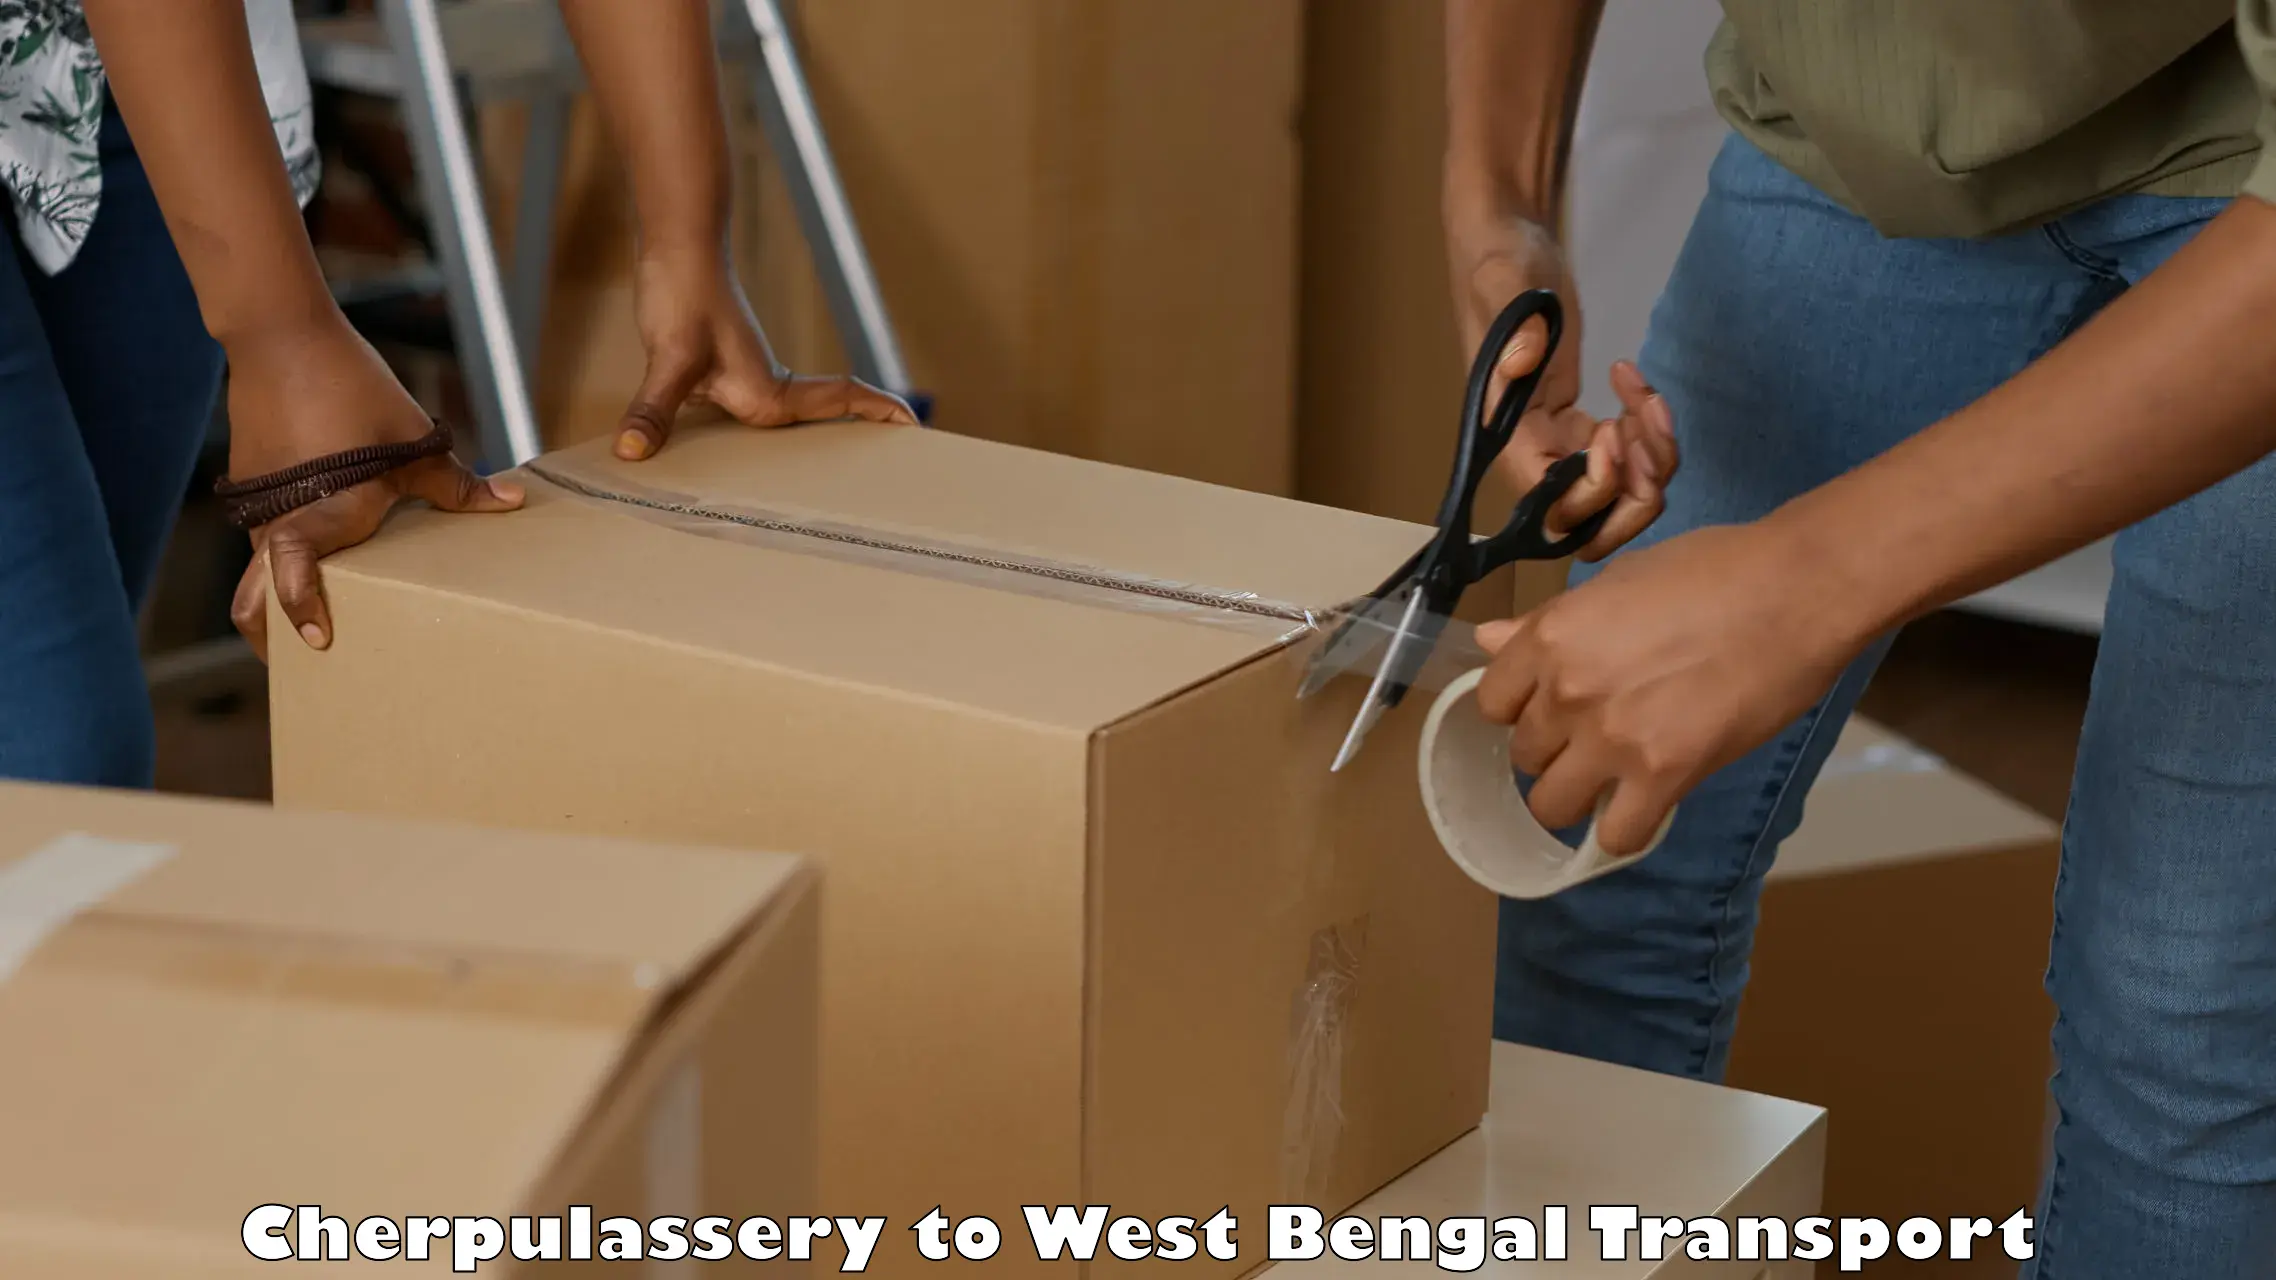 Truck transport companies in India Cherpulassery to West Bengal